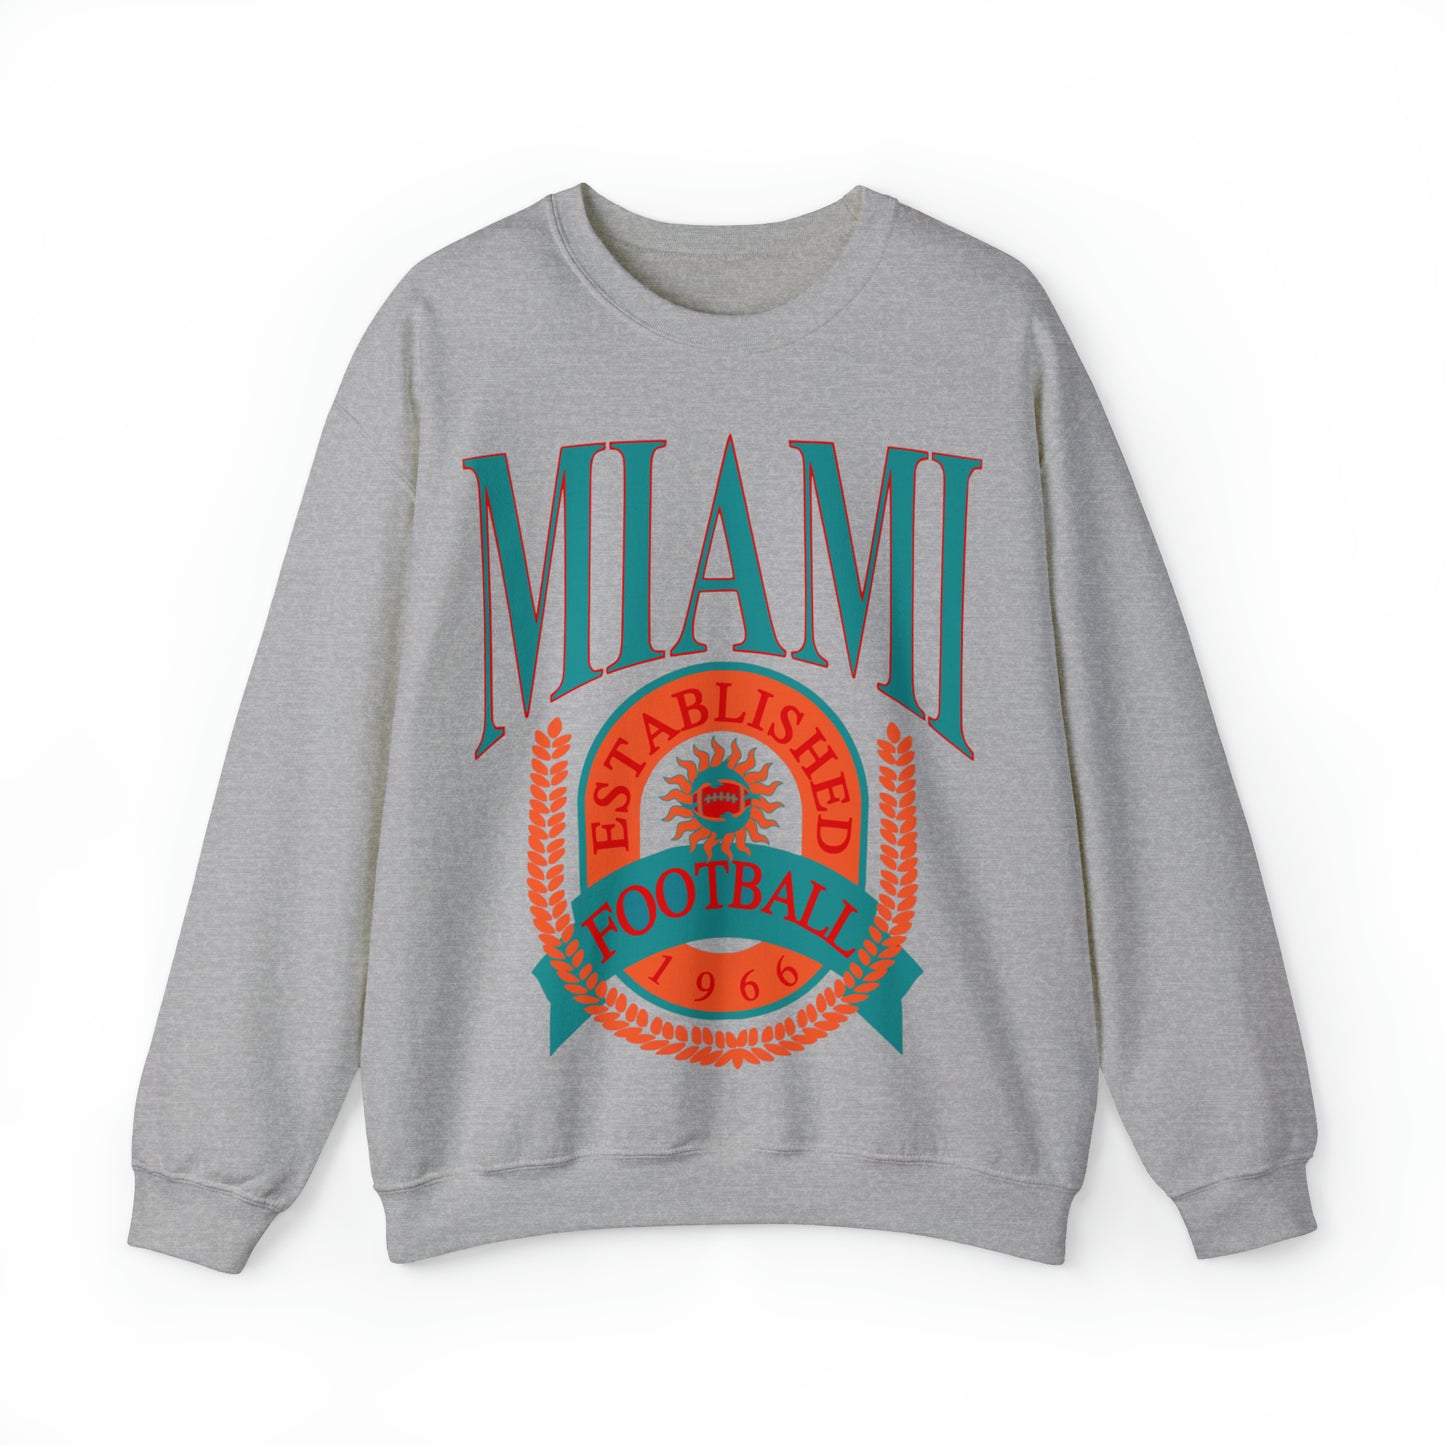 Throwback Miami Dolphins Sweatshirt - Vintage Unisex Football Crewneck  - Men's Women's Unisex Apparel - Design 1